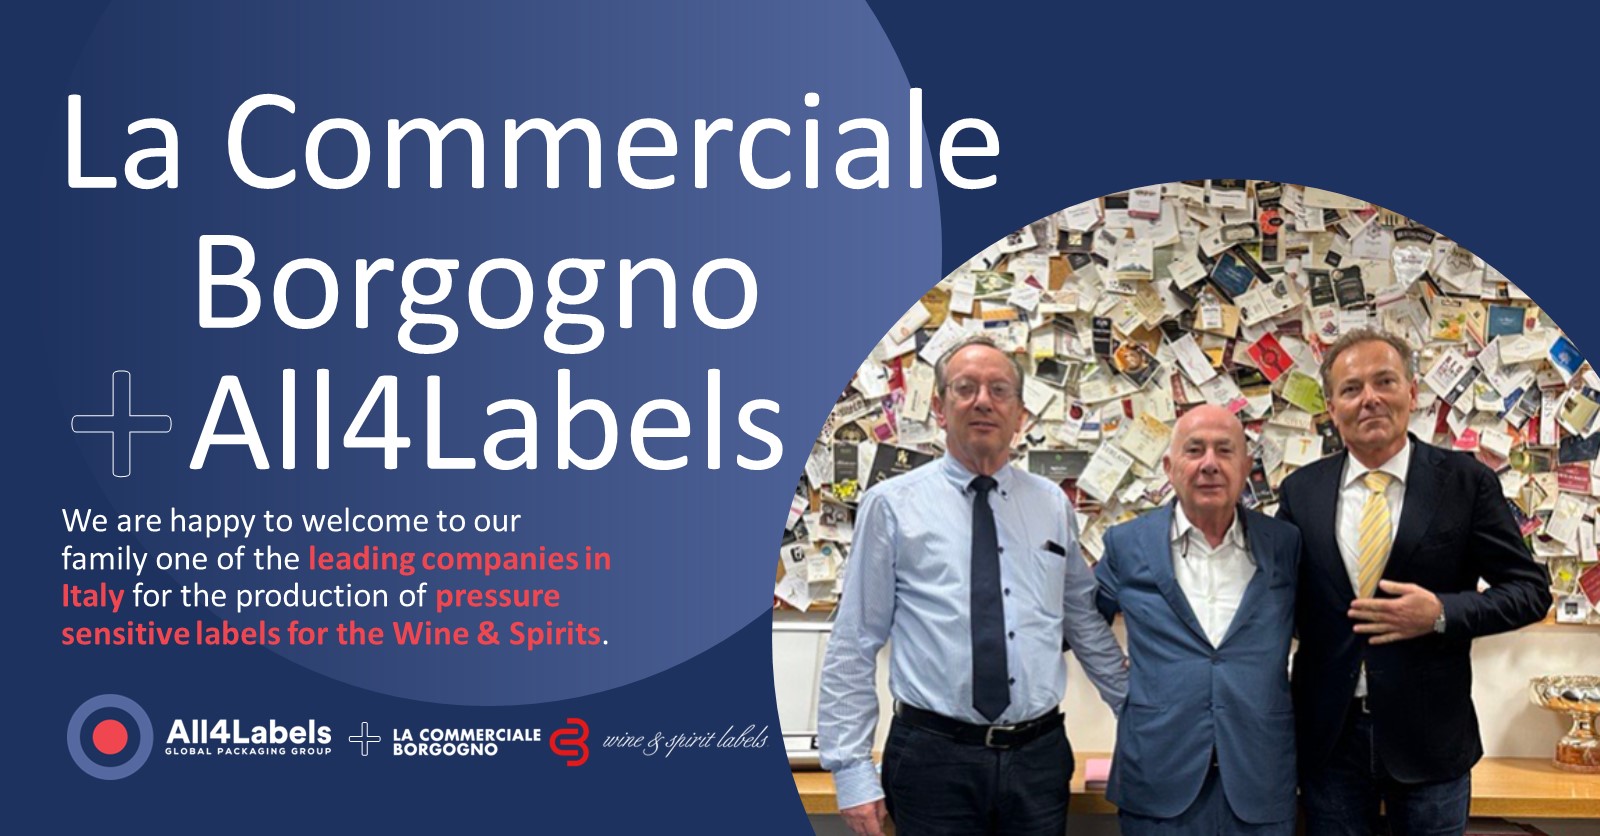 La Commerciale Borgogno joins the All4Labels Group